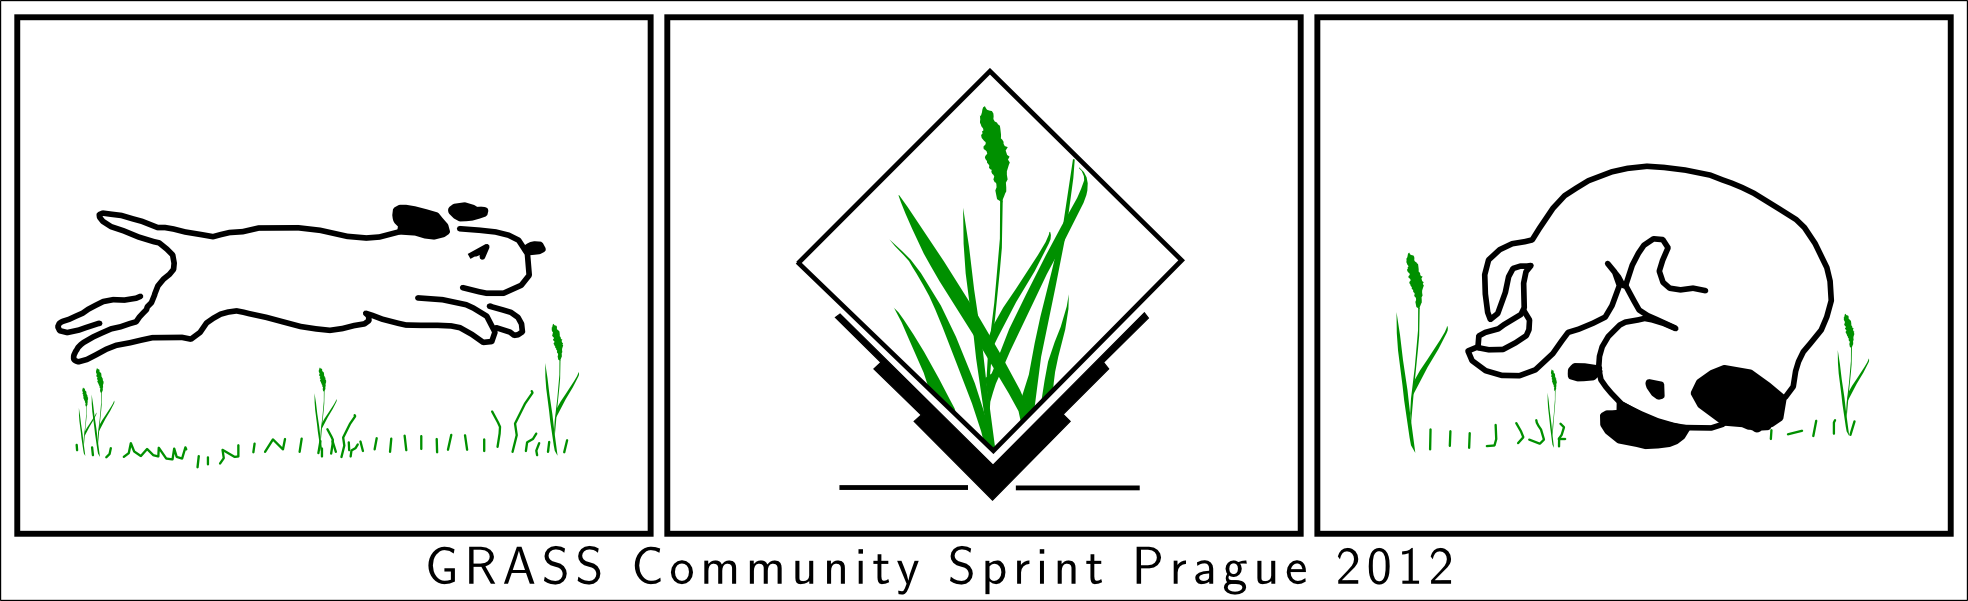 Community sprint prague2012.png